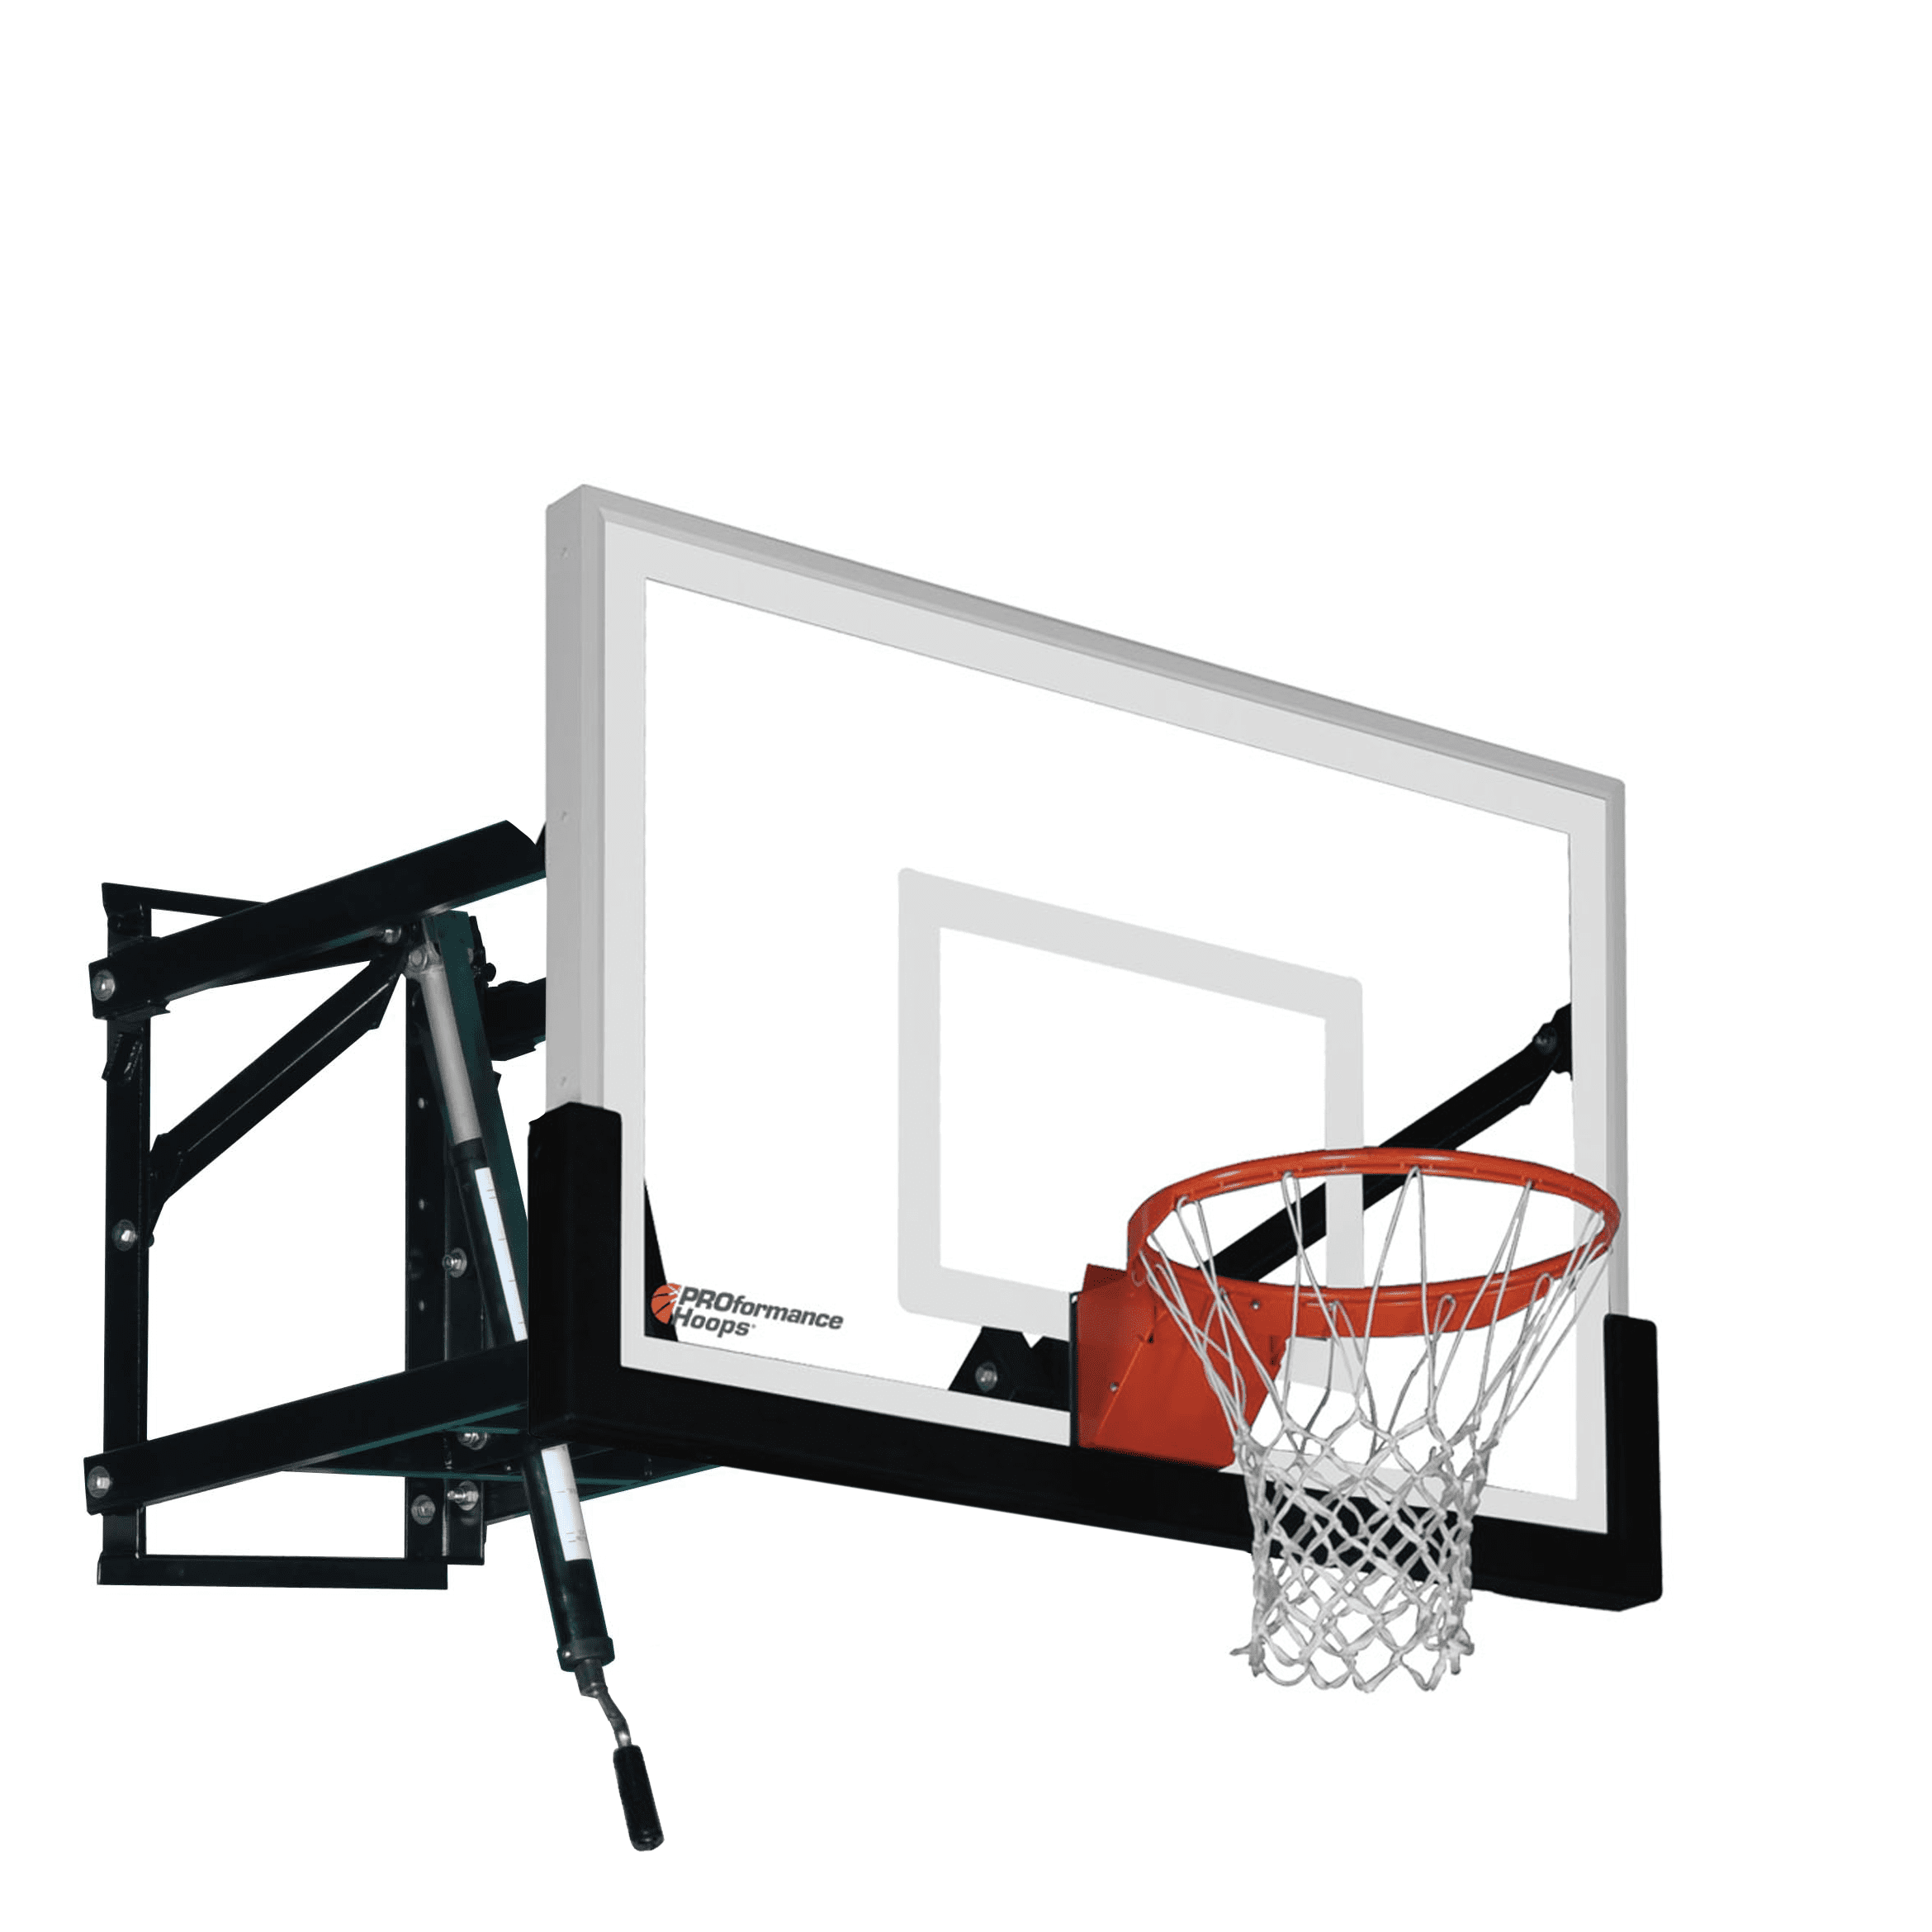 2.6M-3M Adjustable Height Basketball Basketball Stand Hoop Net Backboard System 